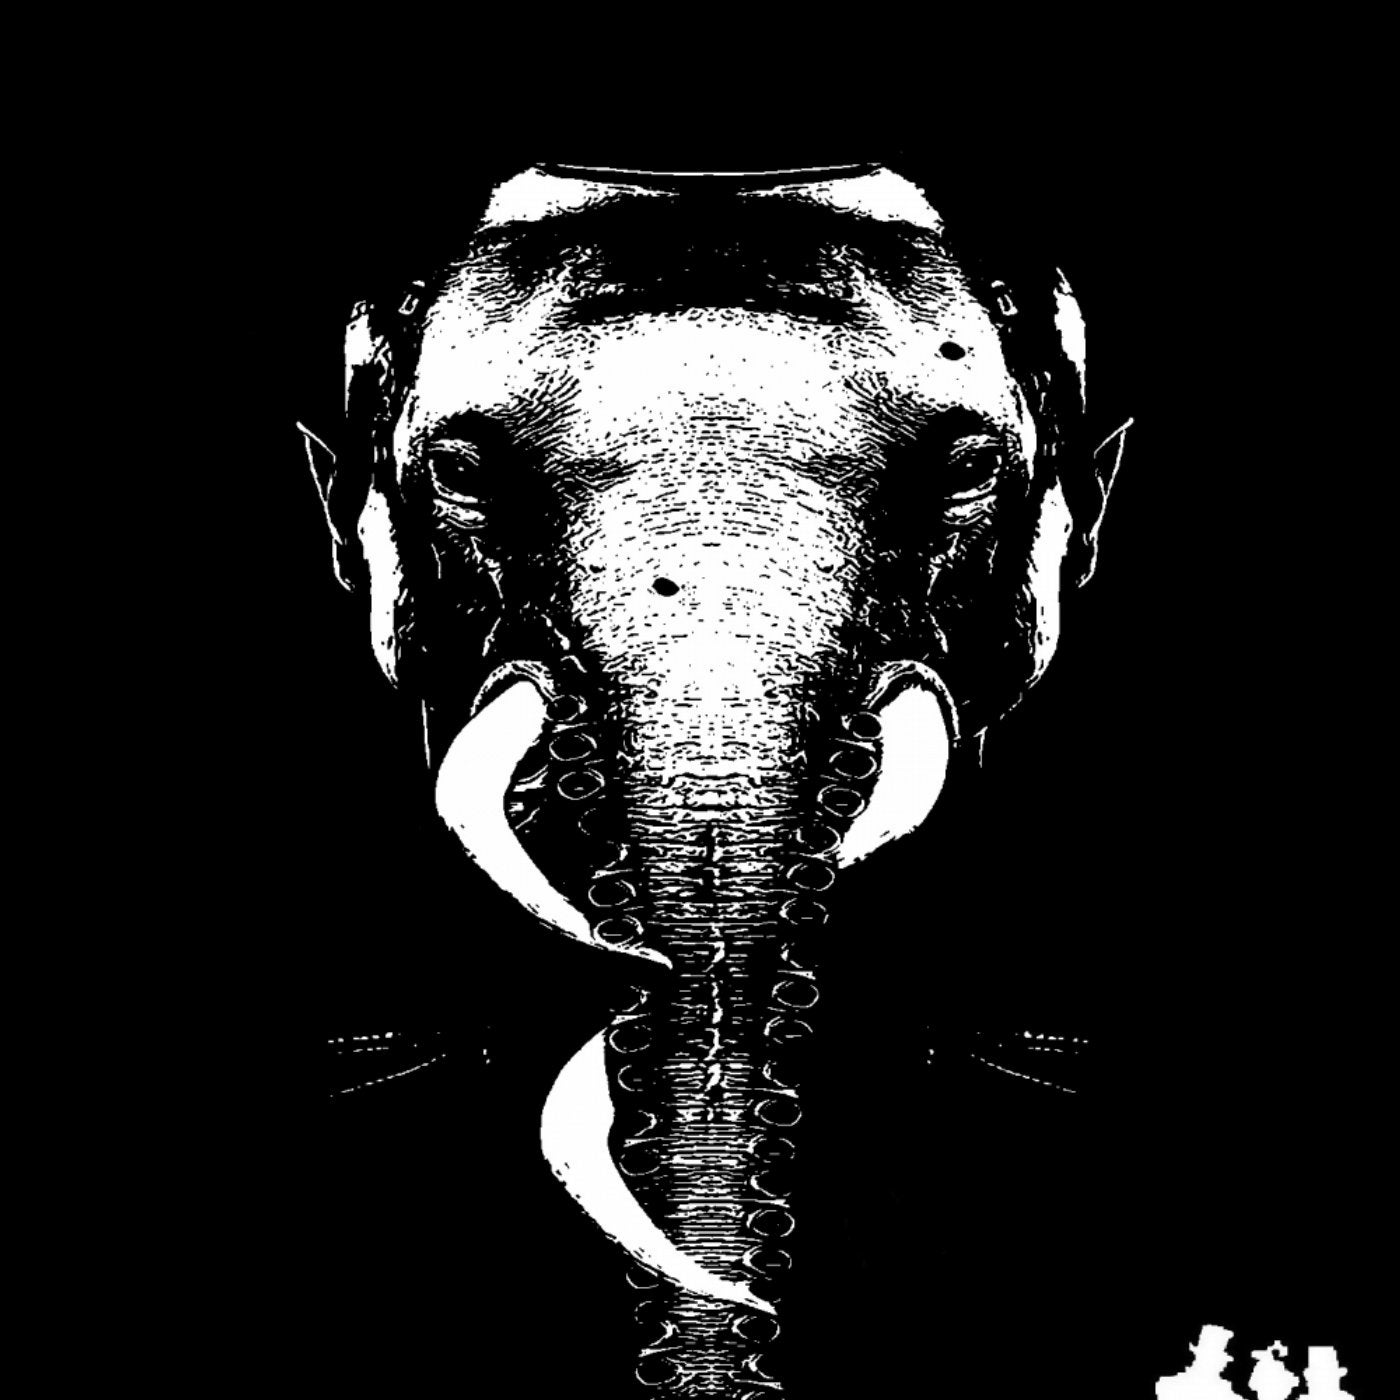 Elephant music